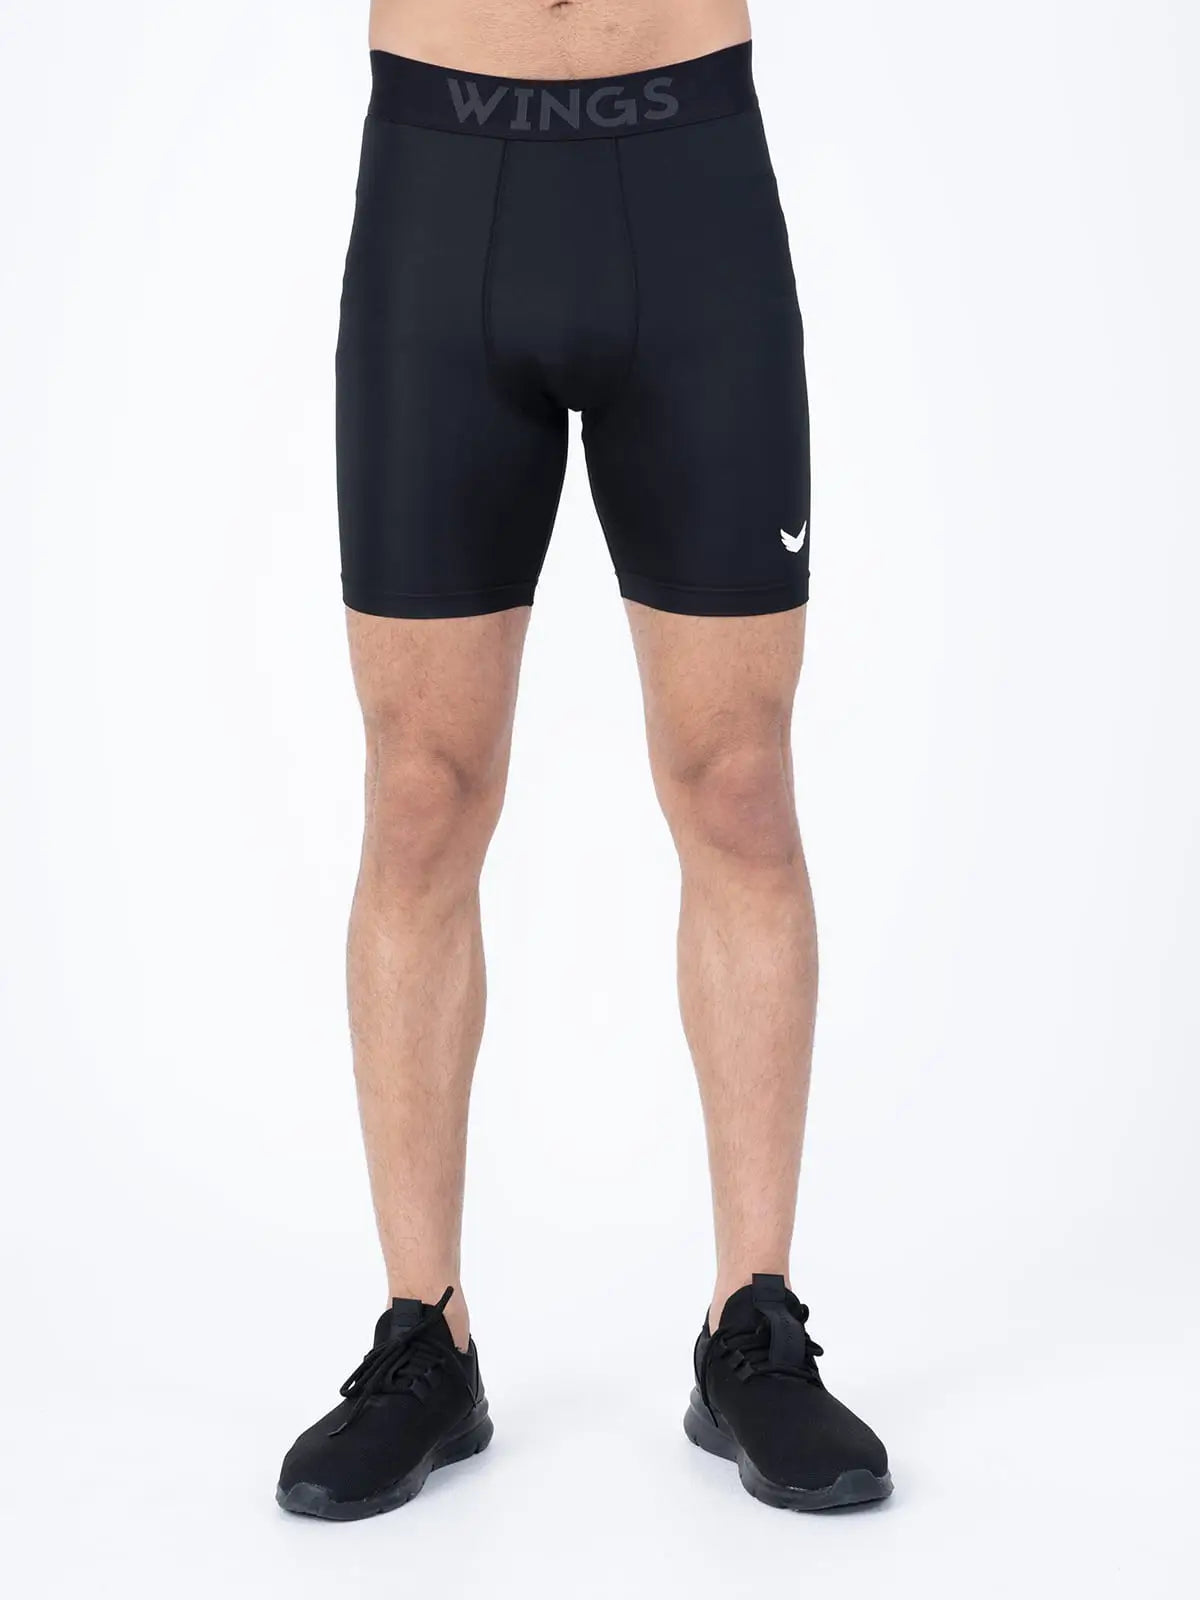 Compression Long Training Shorts - Black